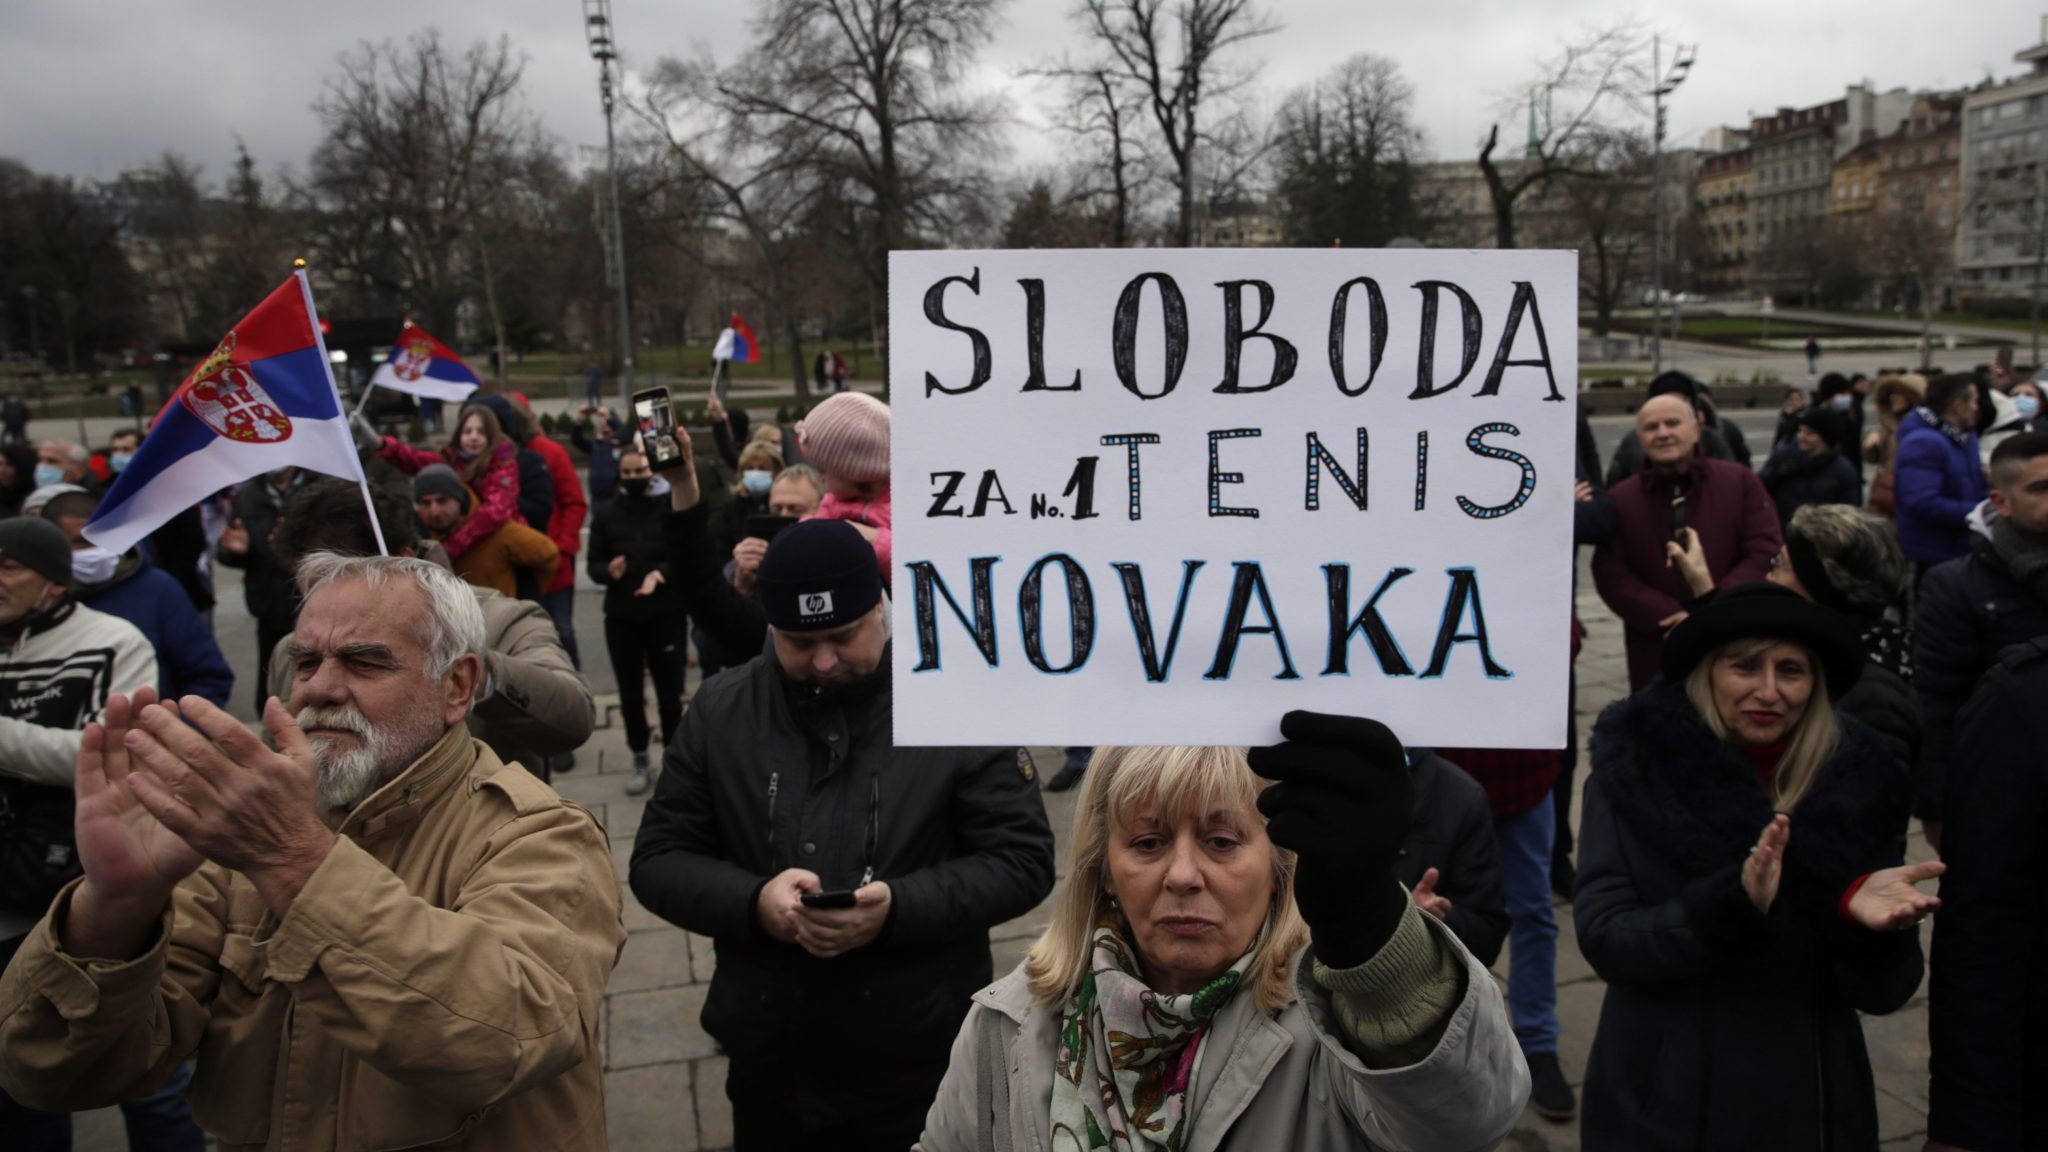 protest in serbia in support of novak djokovic against australia